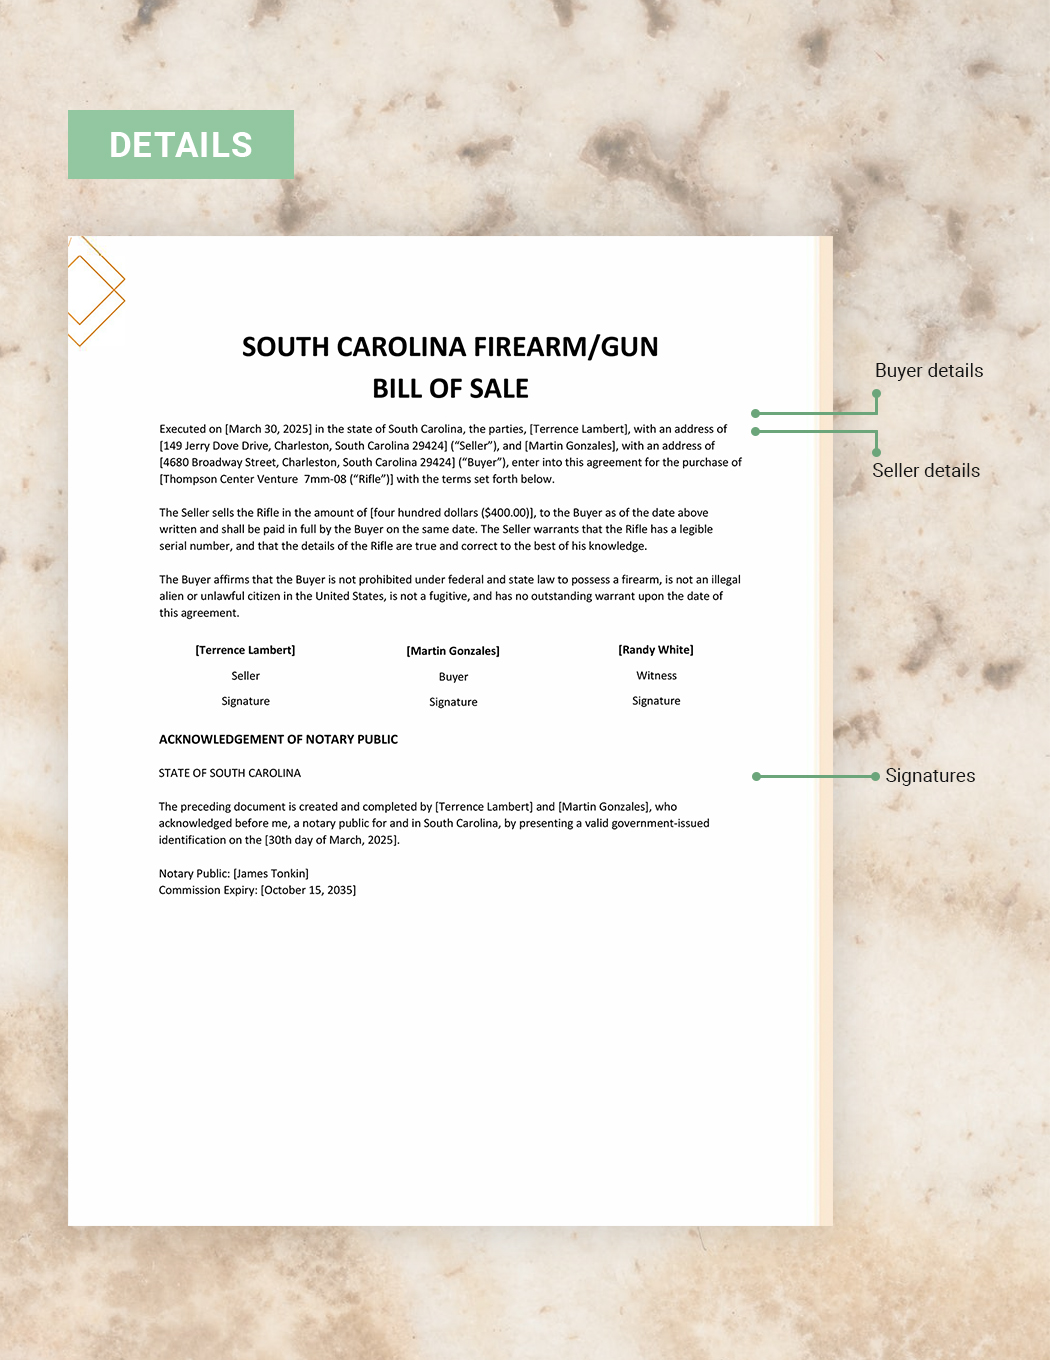 South Carolina Firearm / Gun Bill of Sale Form Template